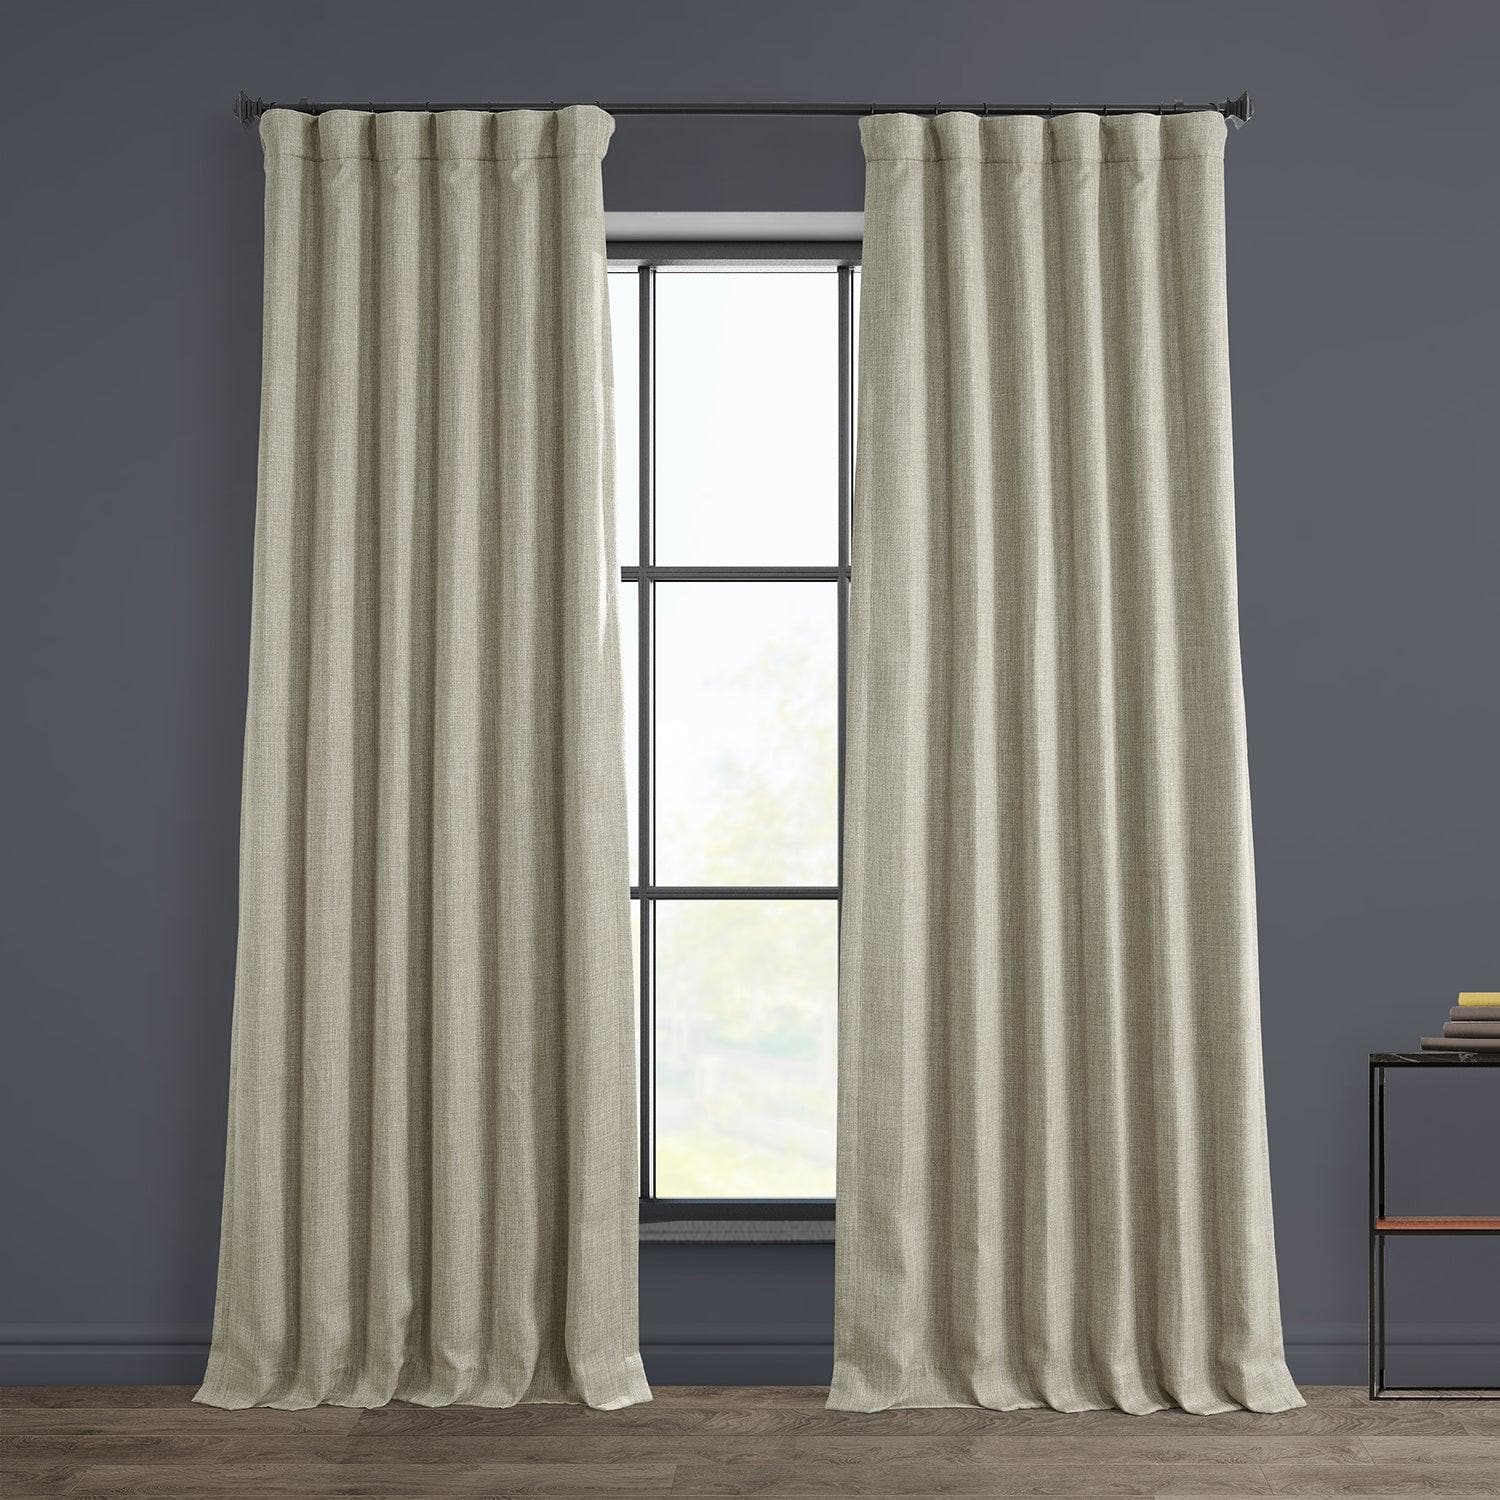 Oatmeal Textured Faux Linen Room Darkening Curtain